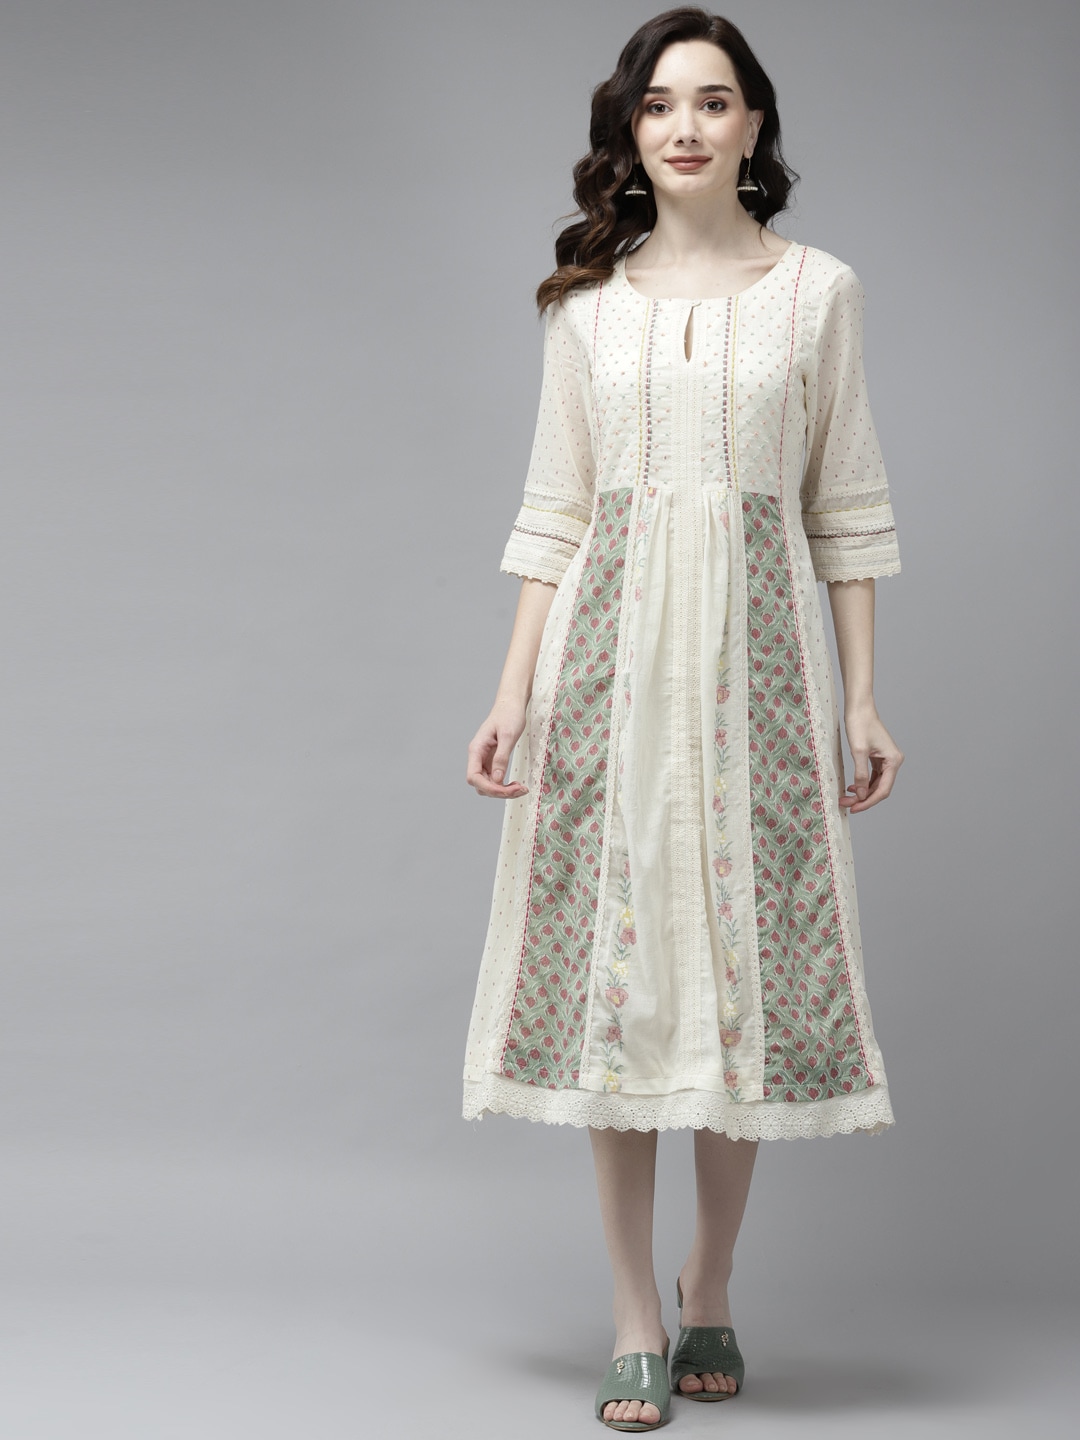 W Off White & Green Ethnic Motifs Keyhole Neck Ethnic A-Line Midi Dress Price in India